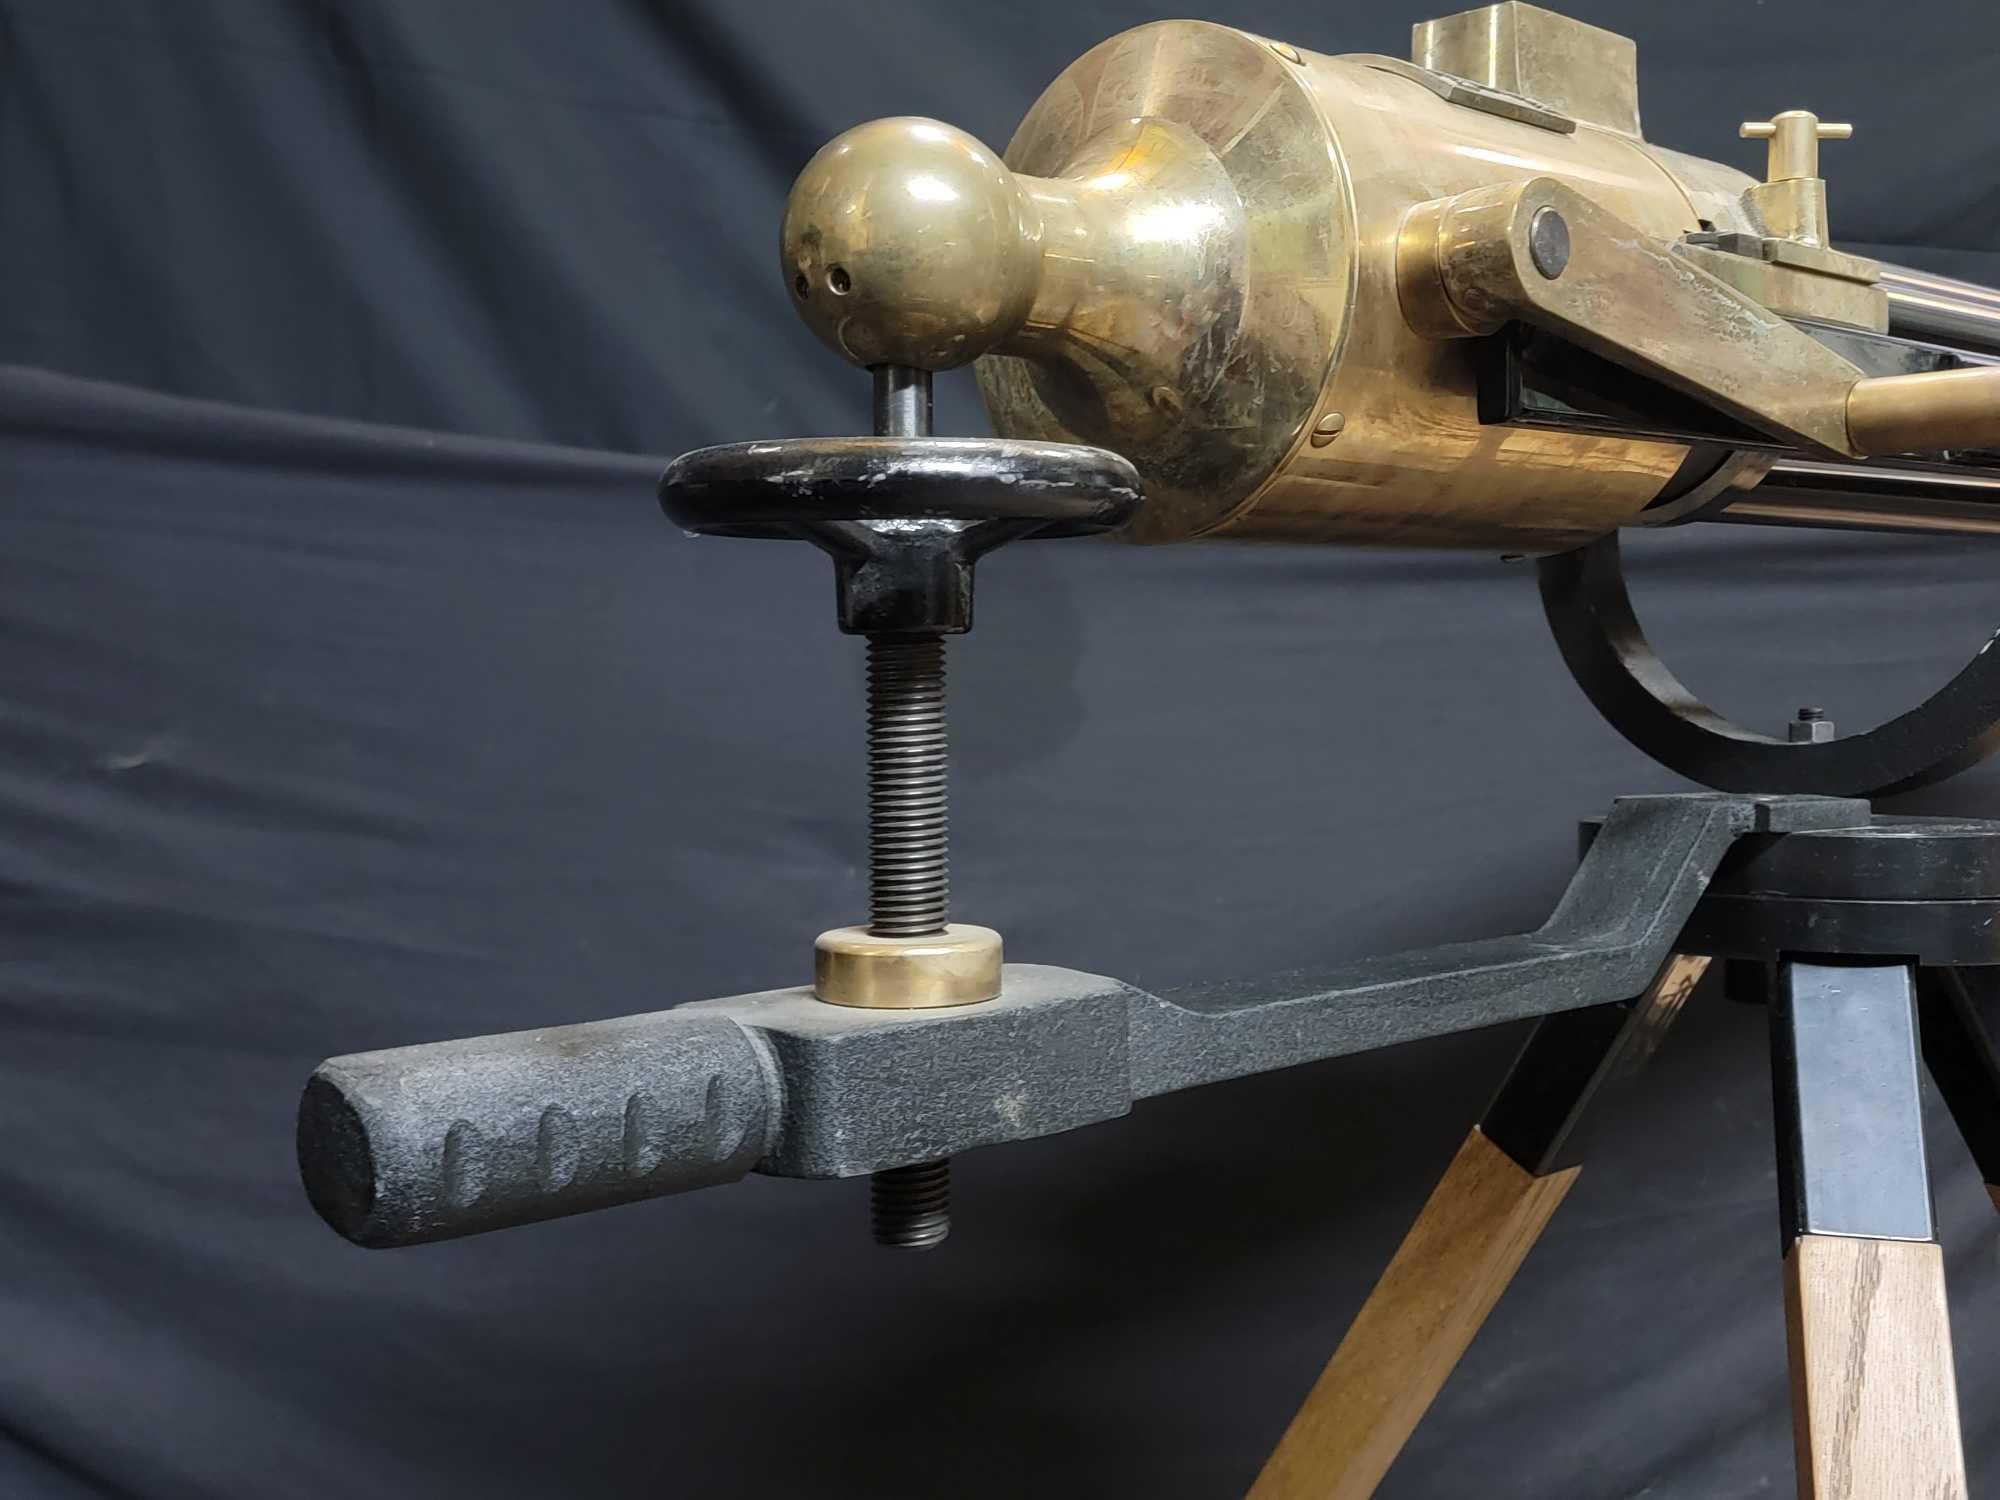 Gatling Battery Gun Co. 1862 Black Powder Gatling Gun Full-Size Reproduction